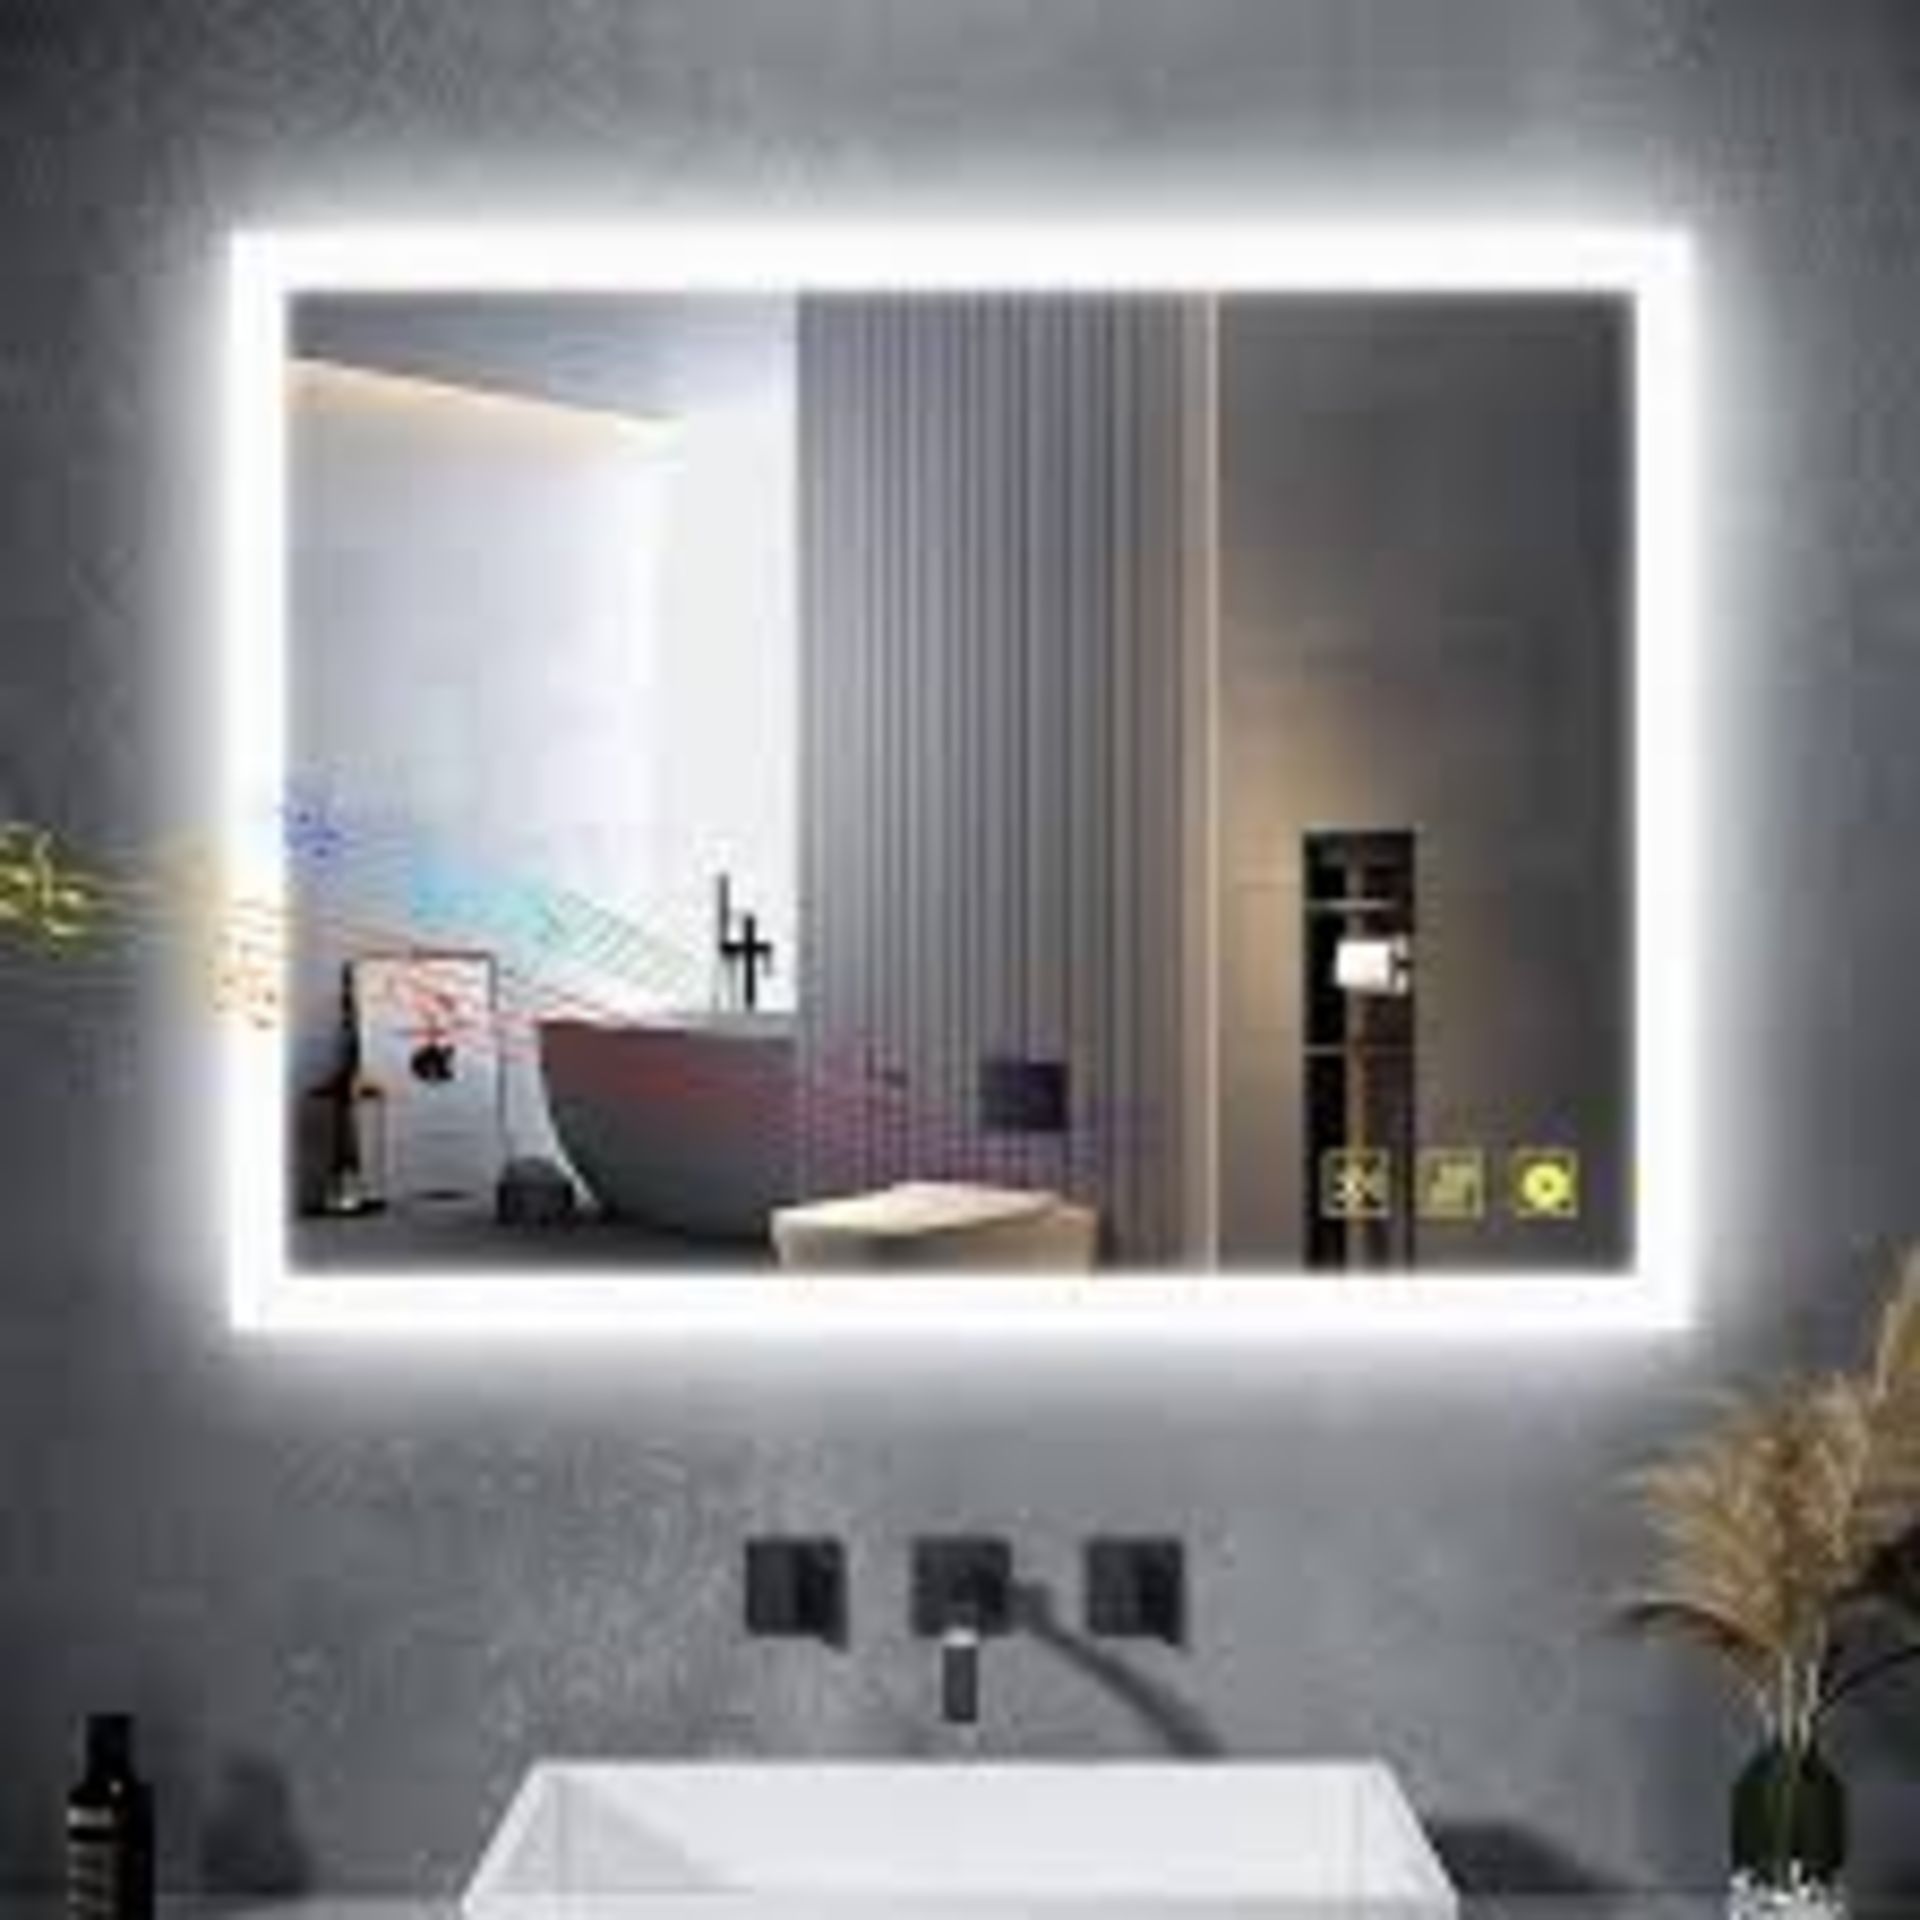 AI-LIGHTING Bathroom Mirror with Lighting. -ER48 *design may vary*